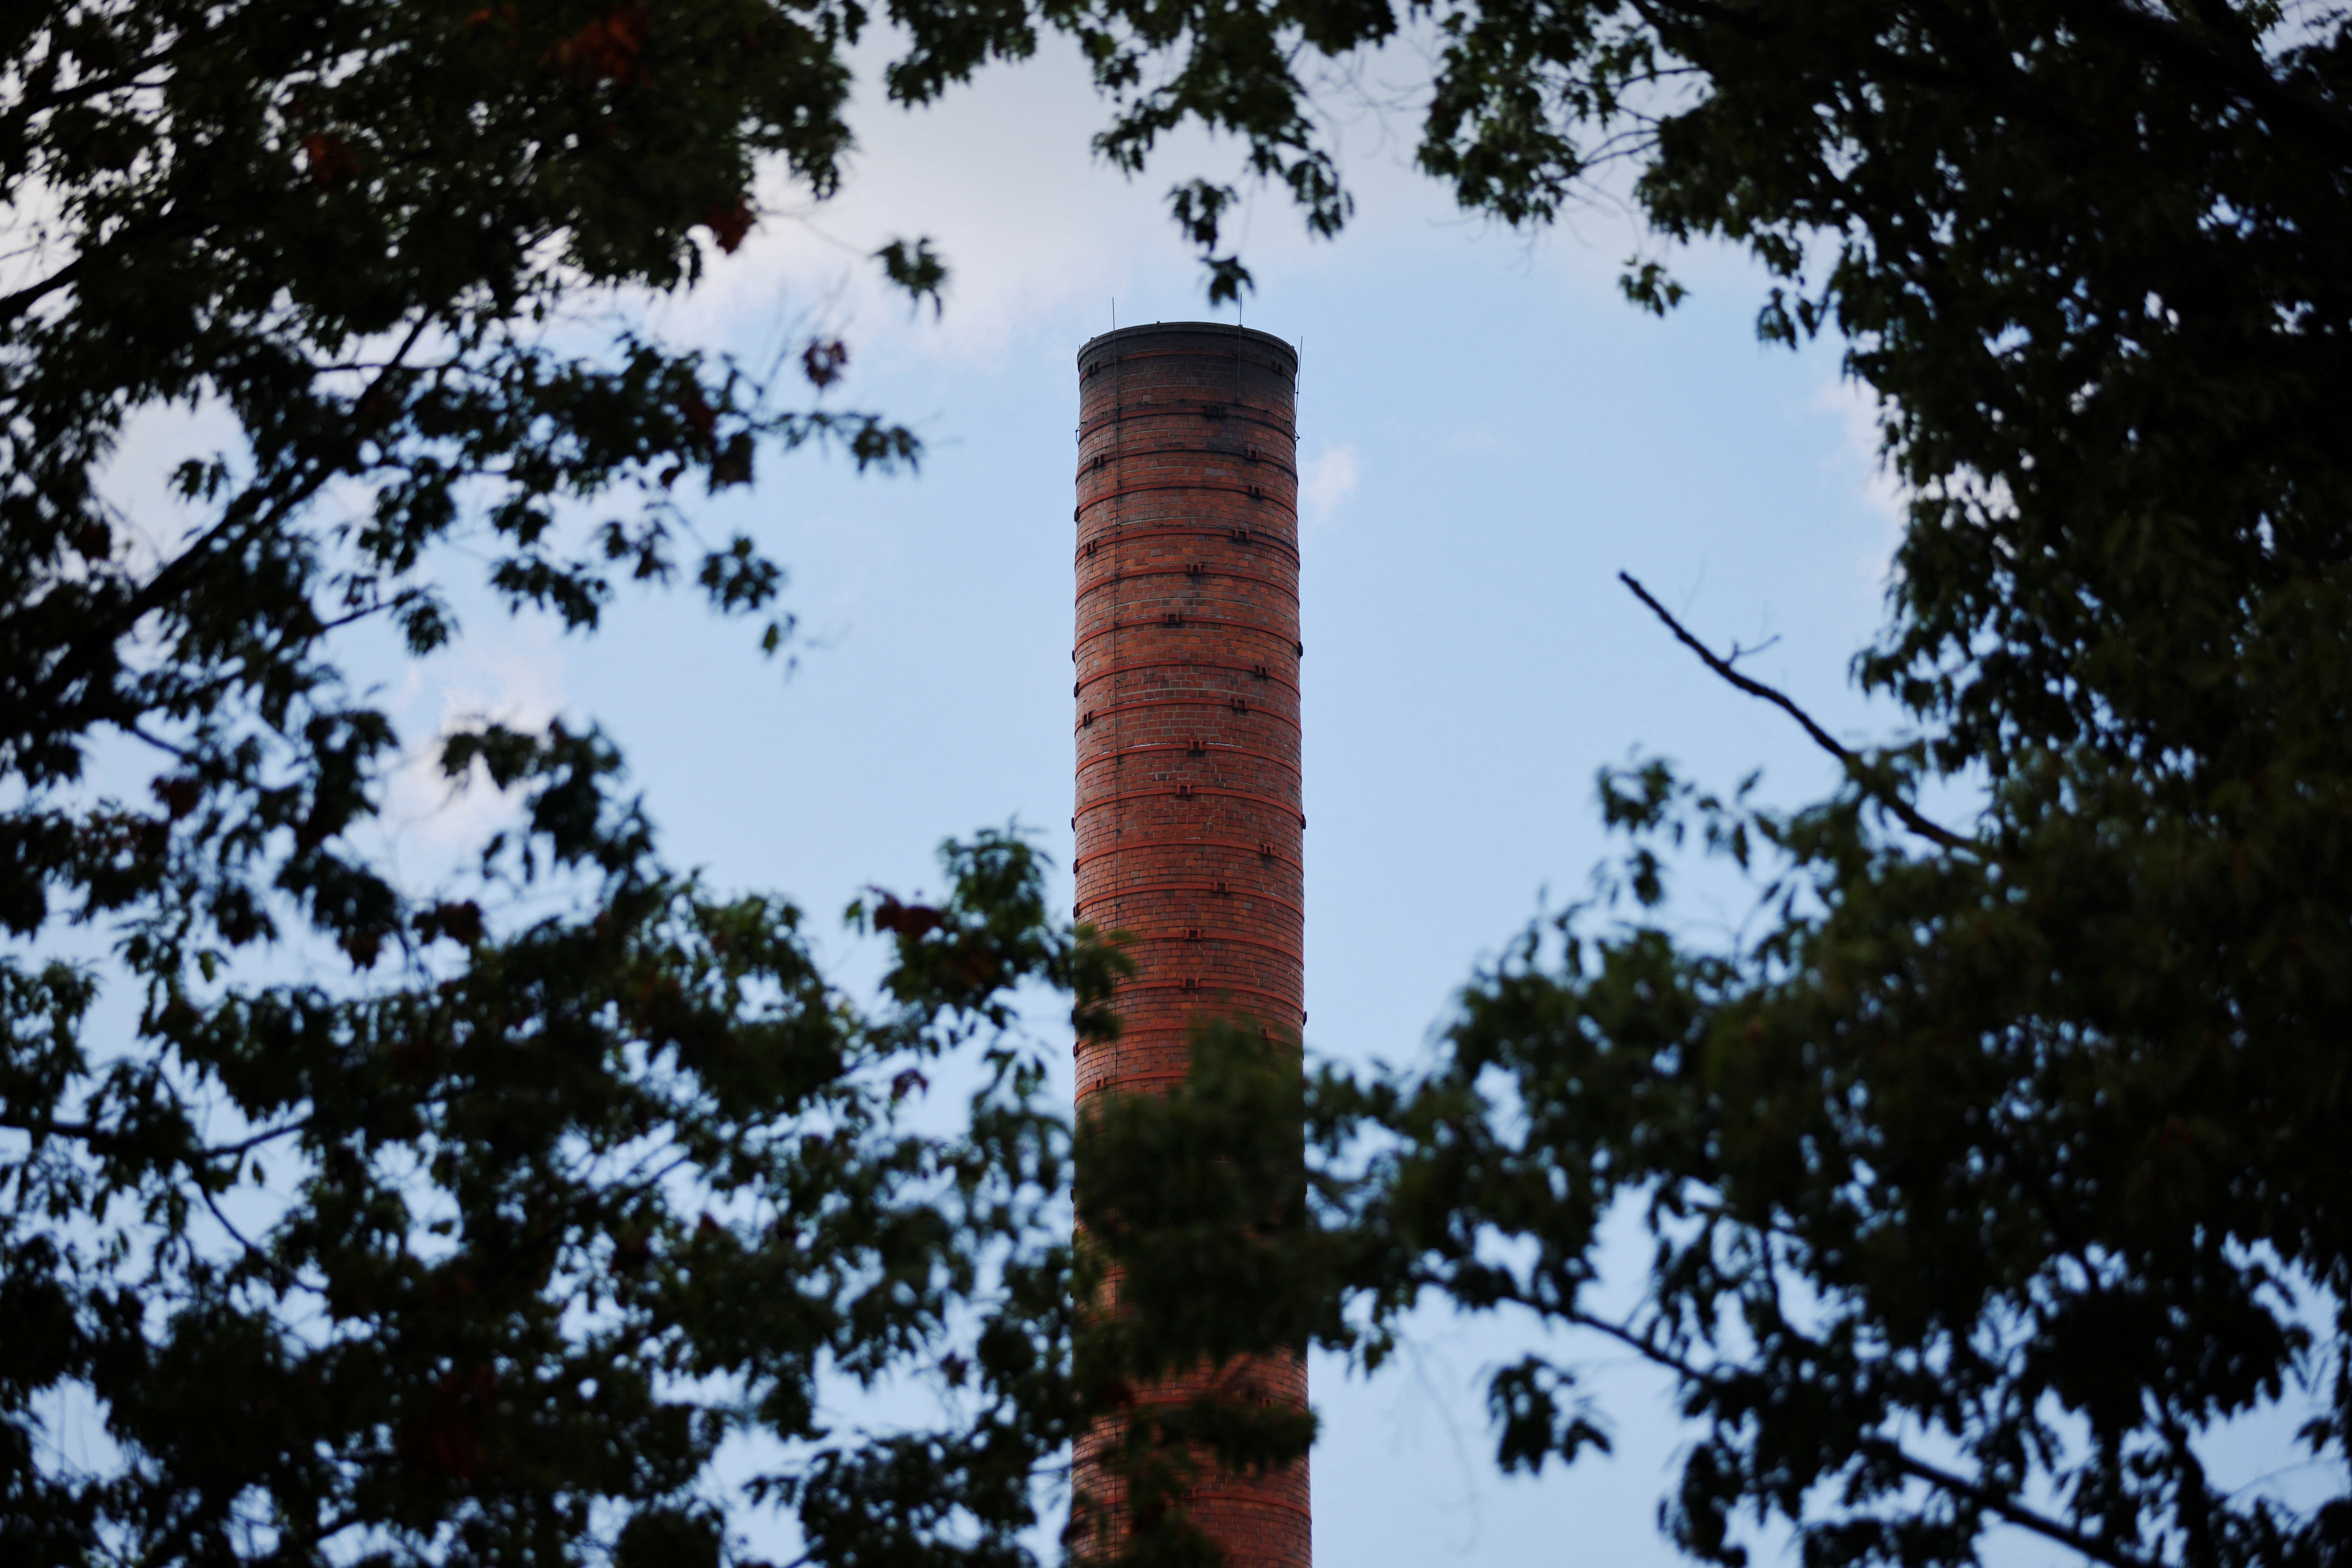 A chimney stack